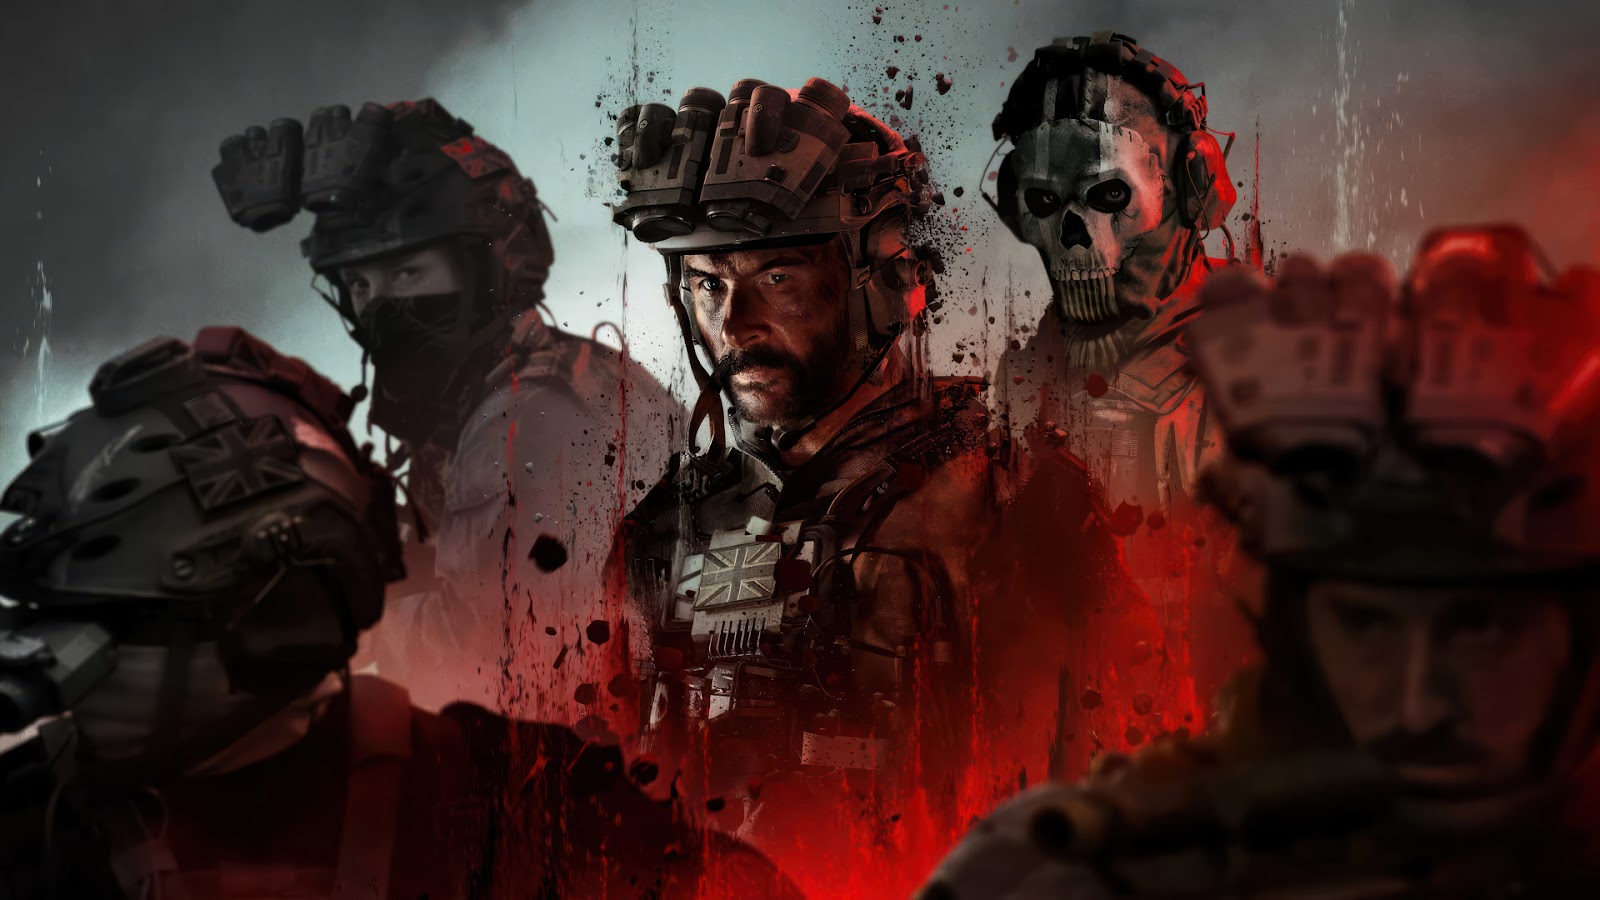 The new meta arrives with the Call of Duty: Modern Warfare II